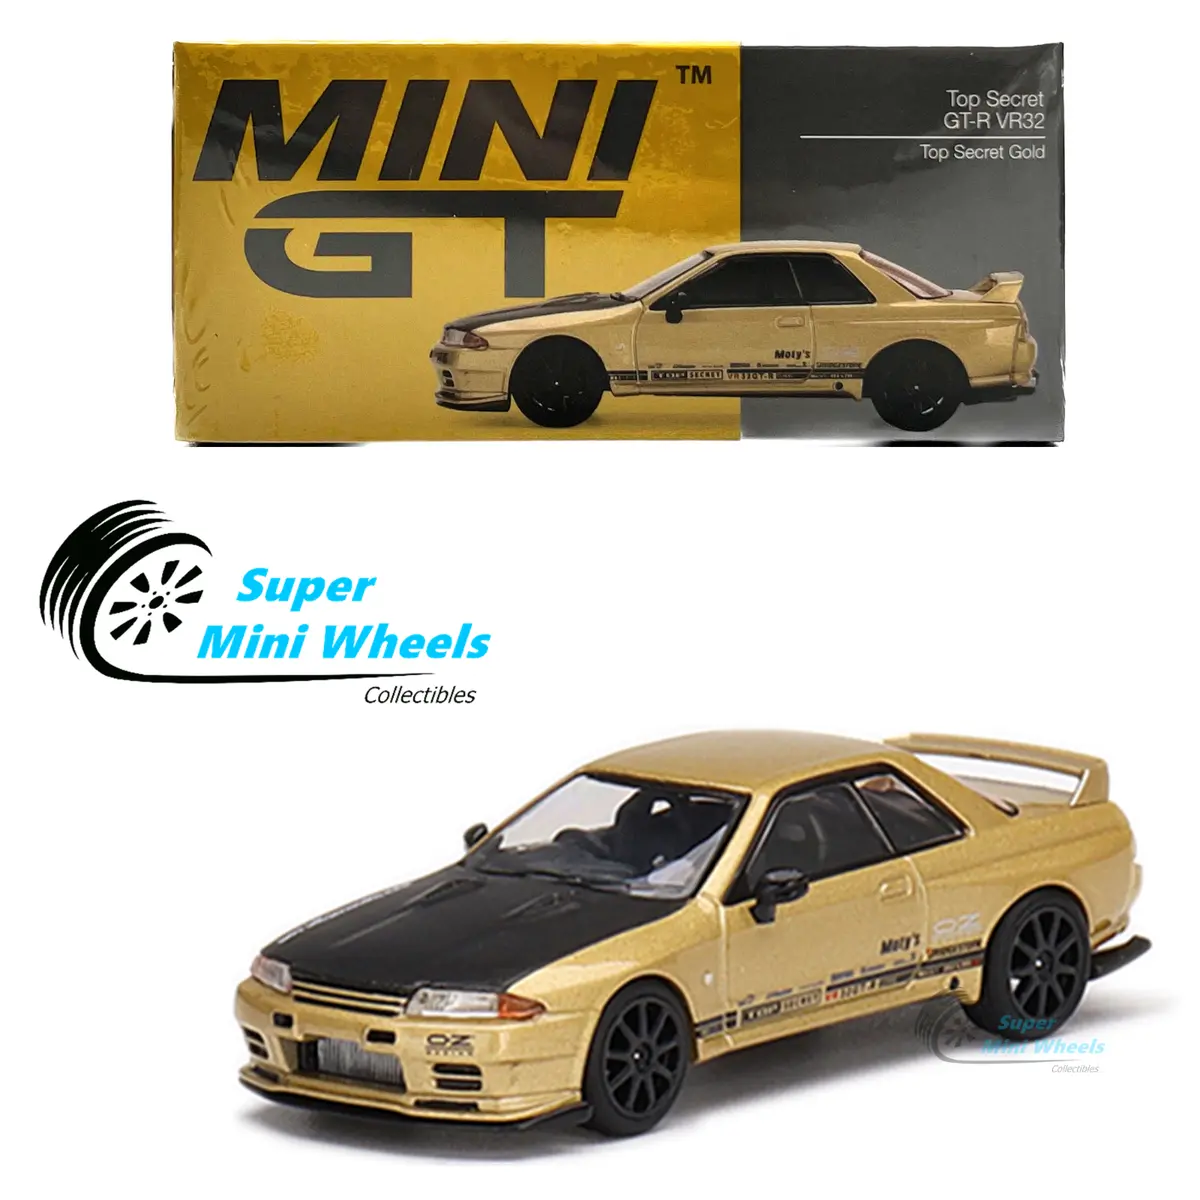 Mini GT 1:64 Top Secret Nissan Skyline GT-R VR32 Top Secret Gold #431